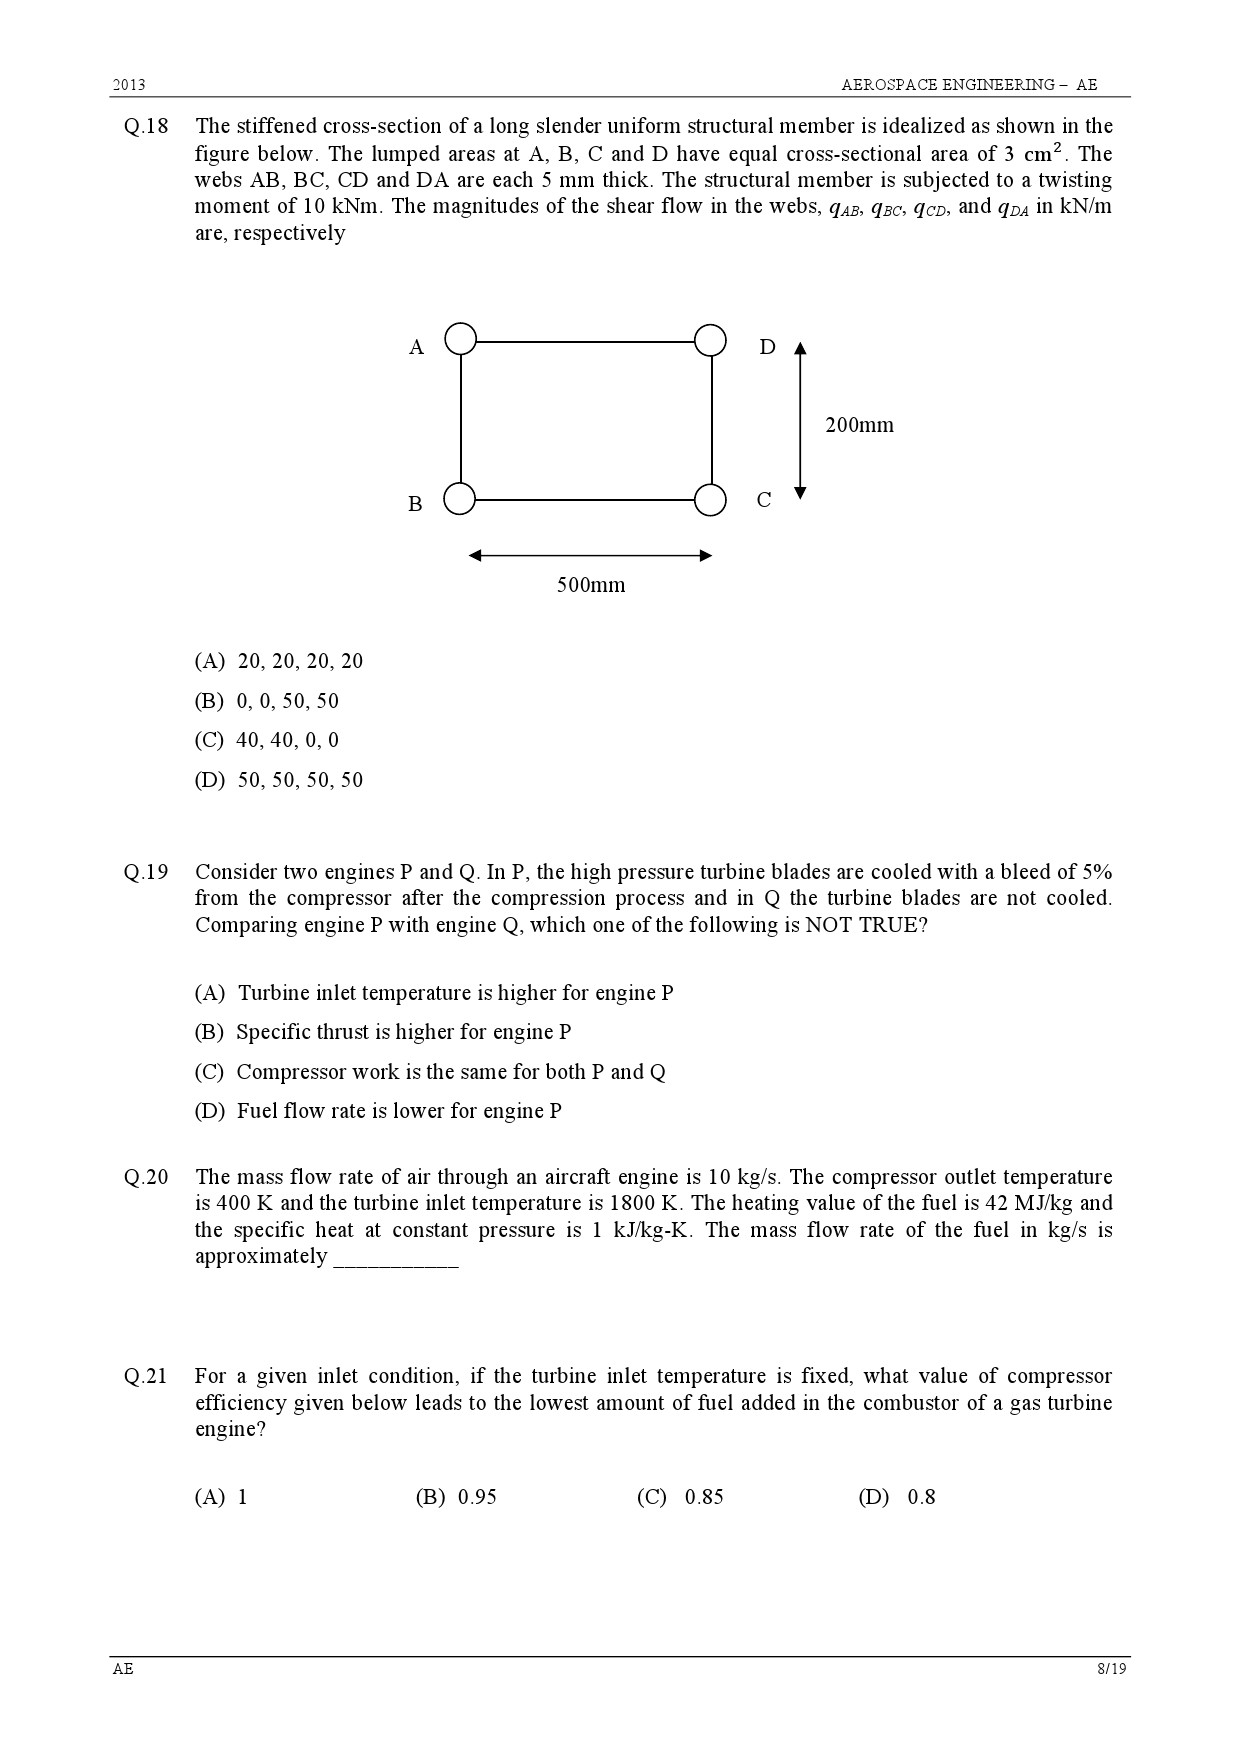 GATE Exam 2013 Aerospace Engineering Question Paper 8